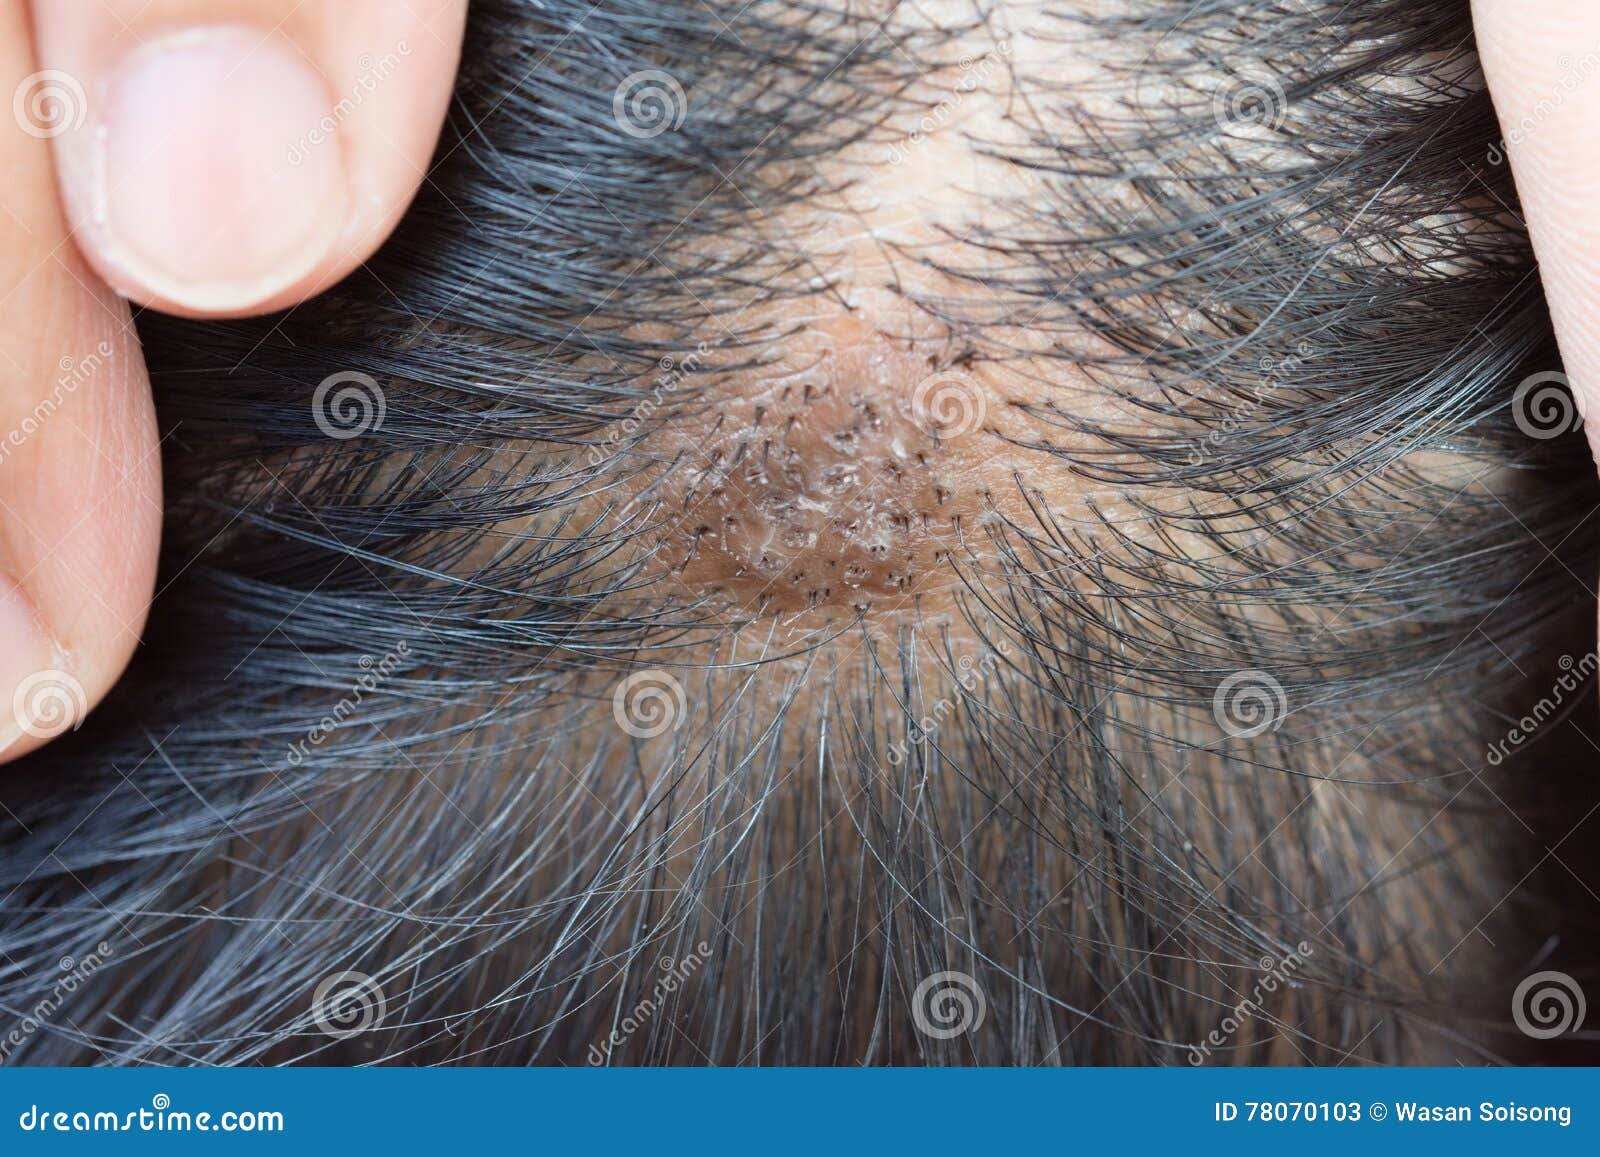 Dermatitis in Hair or Skin Disease on the Head Stock Image - Image of  dandruff, medical: 78070103